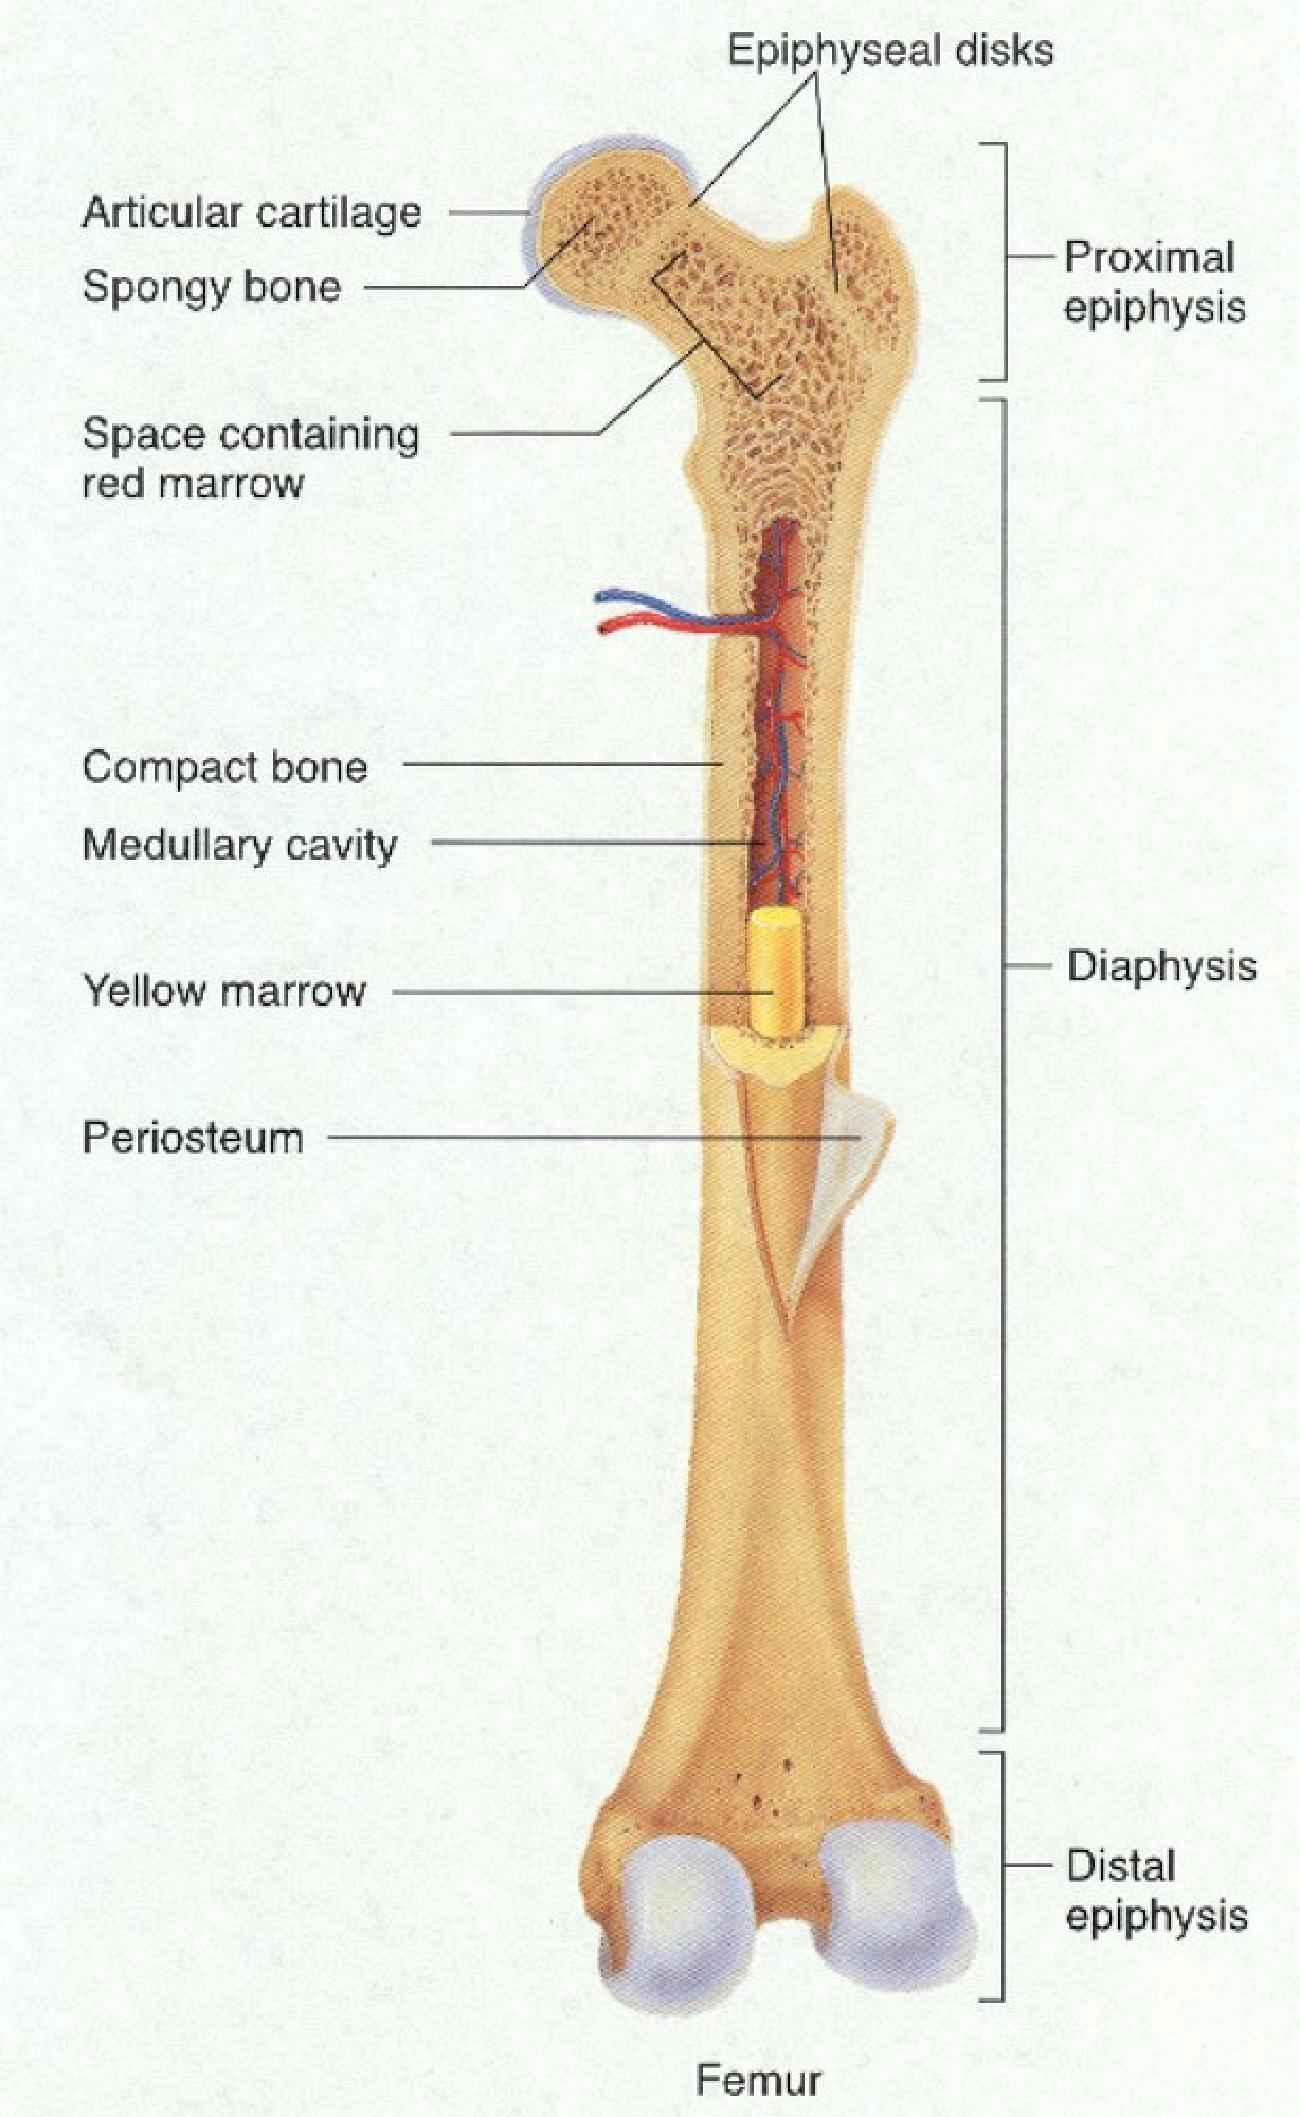 Huesos Capa externa de hueso compacto Interior formado por hueso esponjoso Cavidad medular central: 1. Médula ósea roja 2.